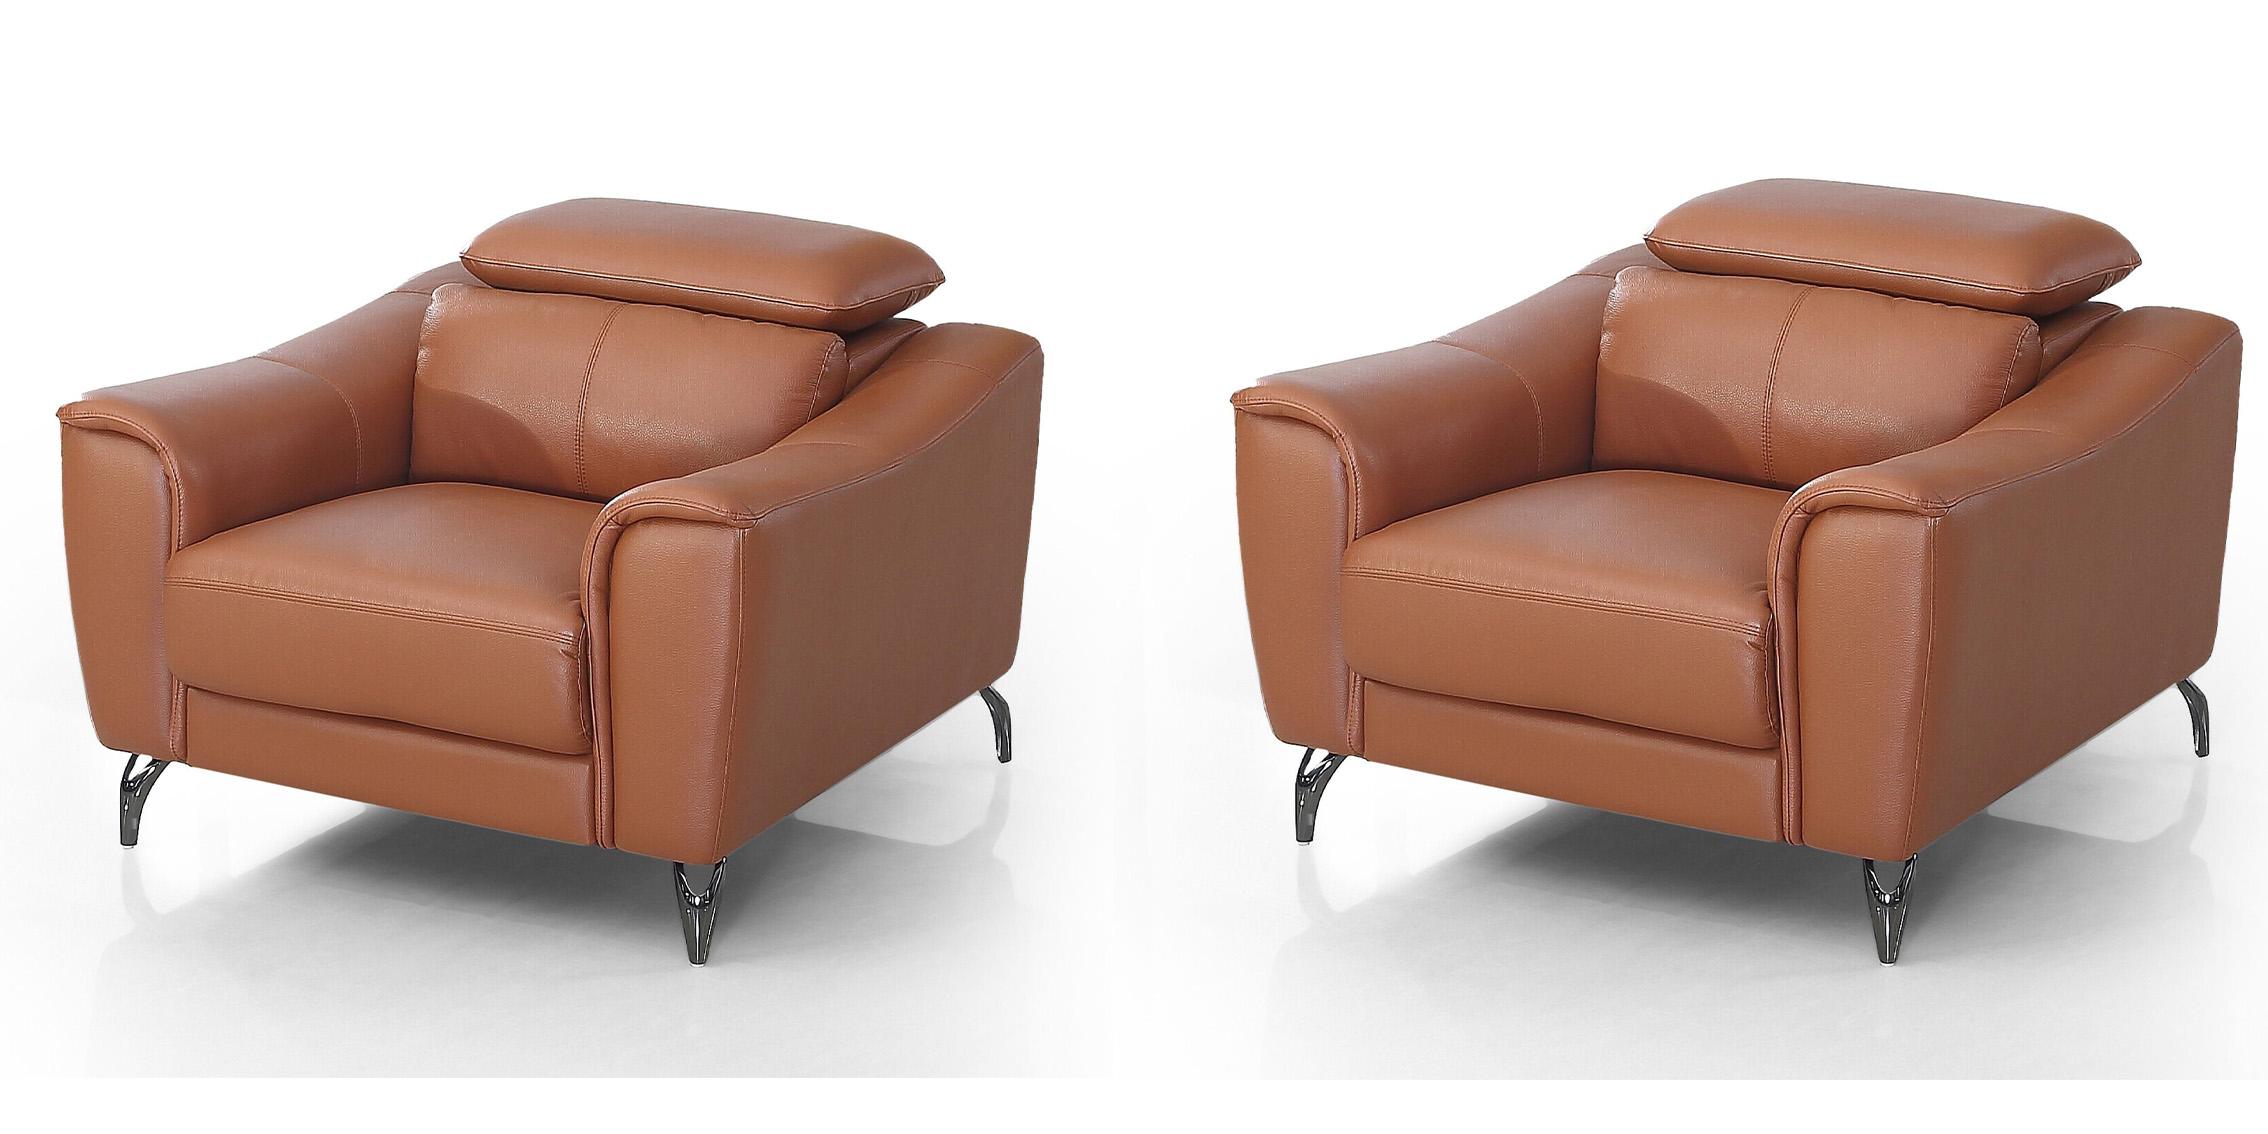 Contemporary, Modern Arm Chair Set VGBNS-1803-BRN-CH-Set-2 VGBNS-1803-BRN-CH-Set-2 in Cognac Leather